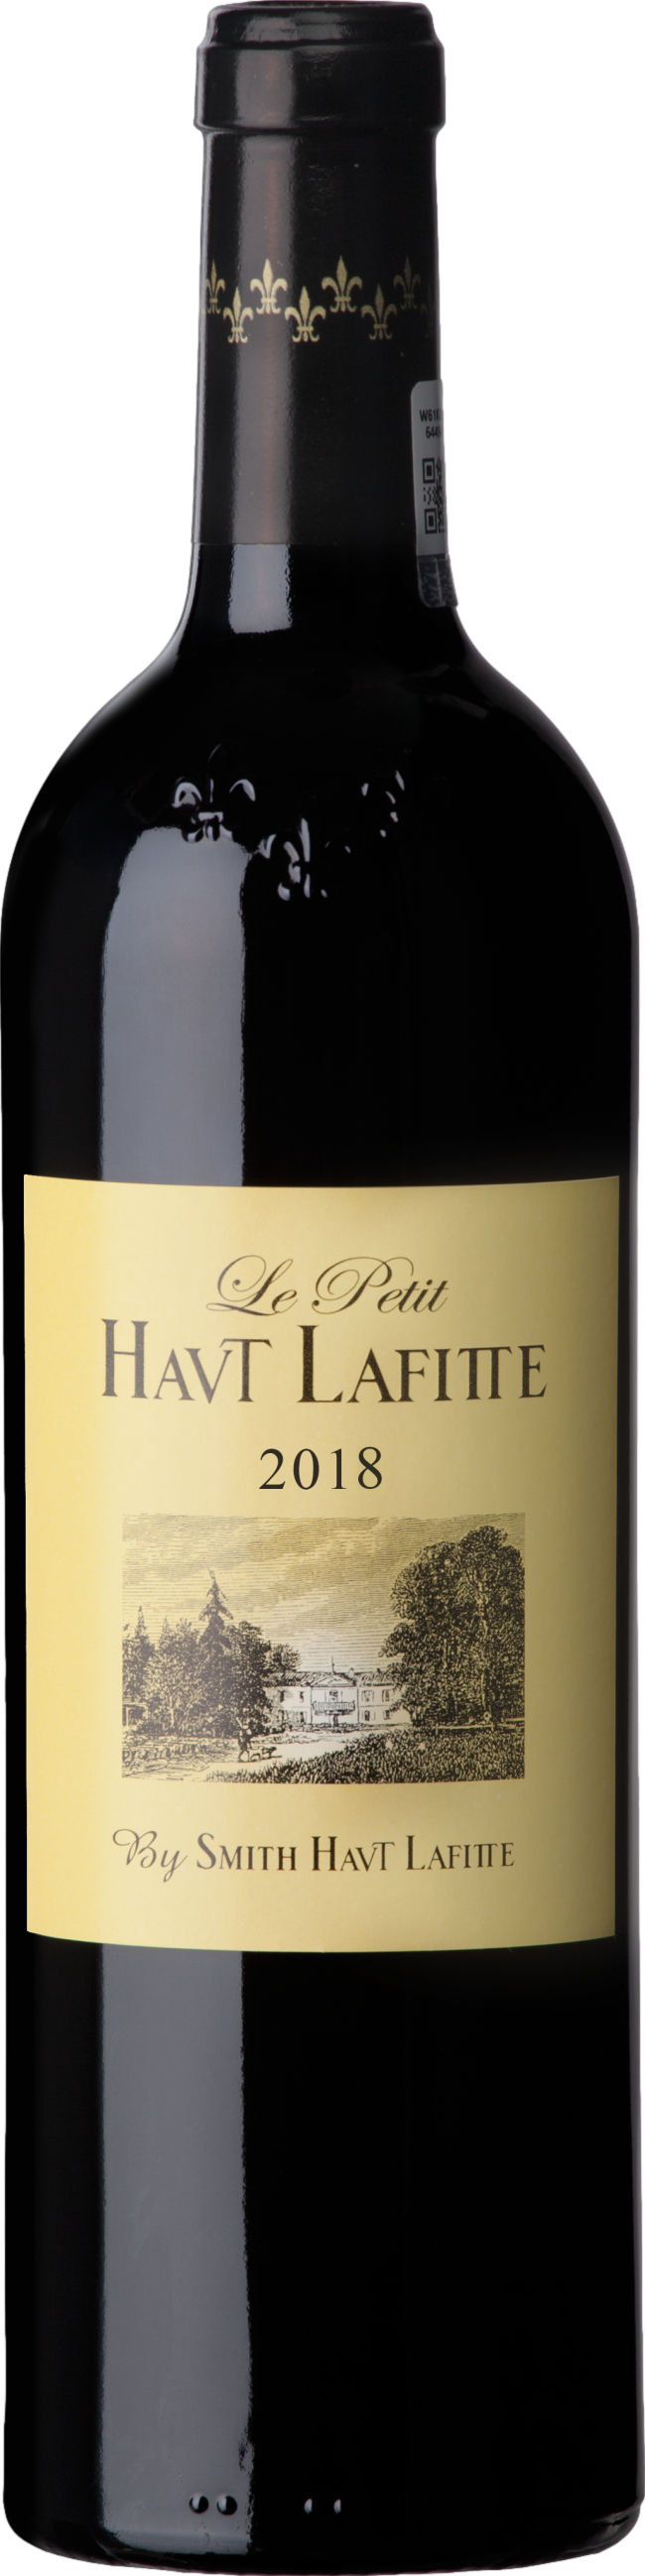 Le Chat günstig Kaufen-Chateau Smith Haut Lafitte Le Petit Haut Lafitte 2018. Chateau Smith Haut Lafitte Le Petit Haut Lafitte 2018 . 